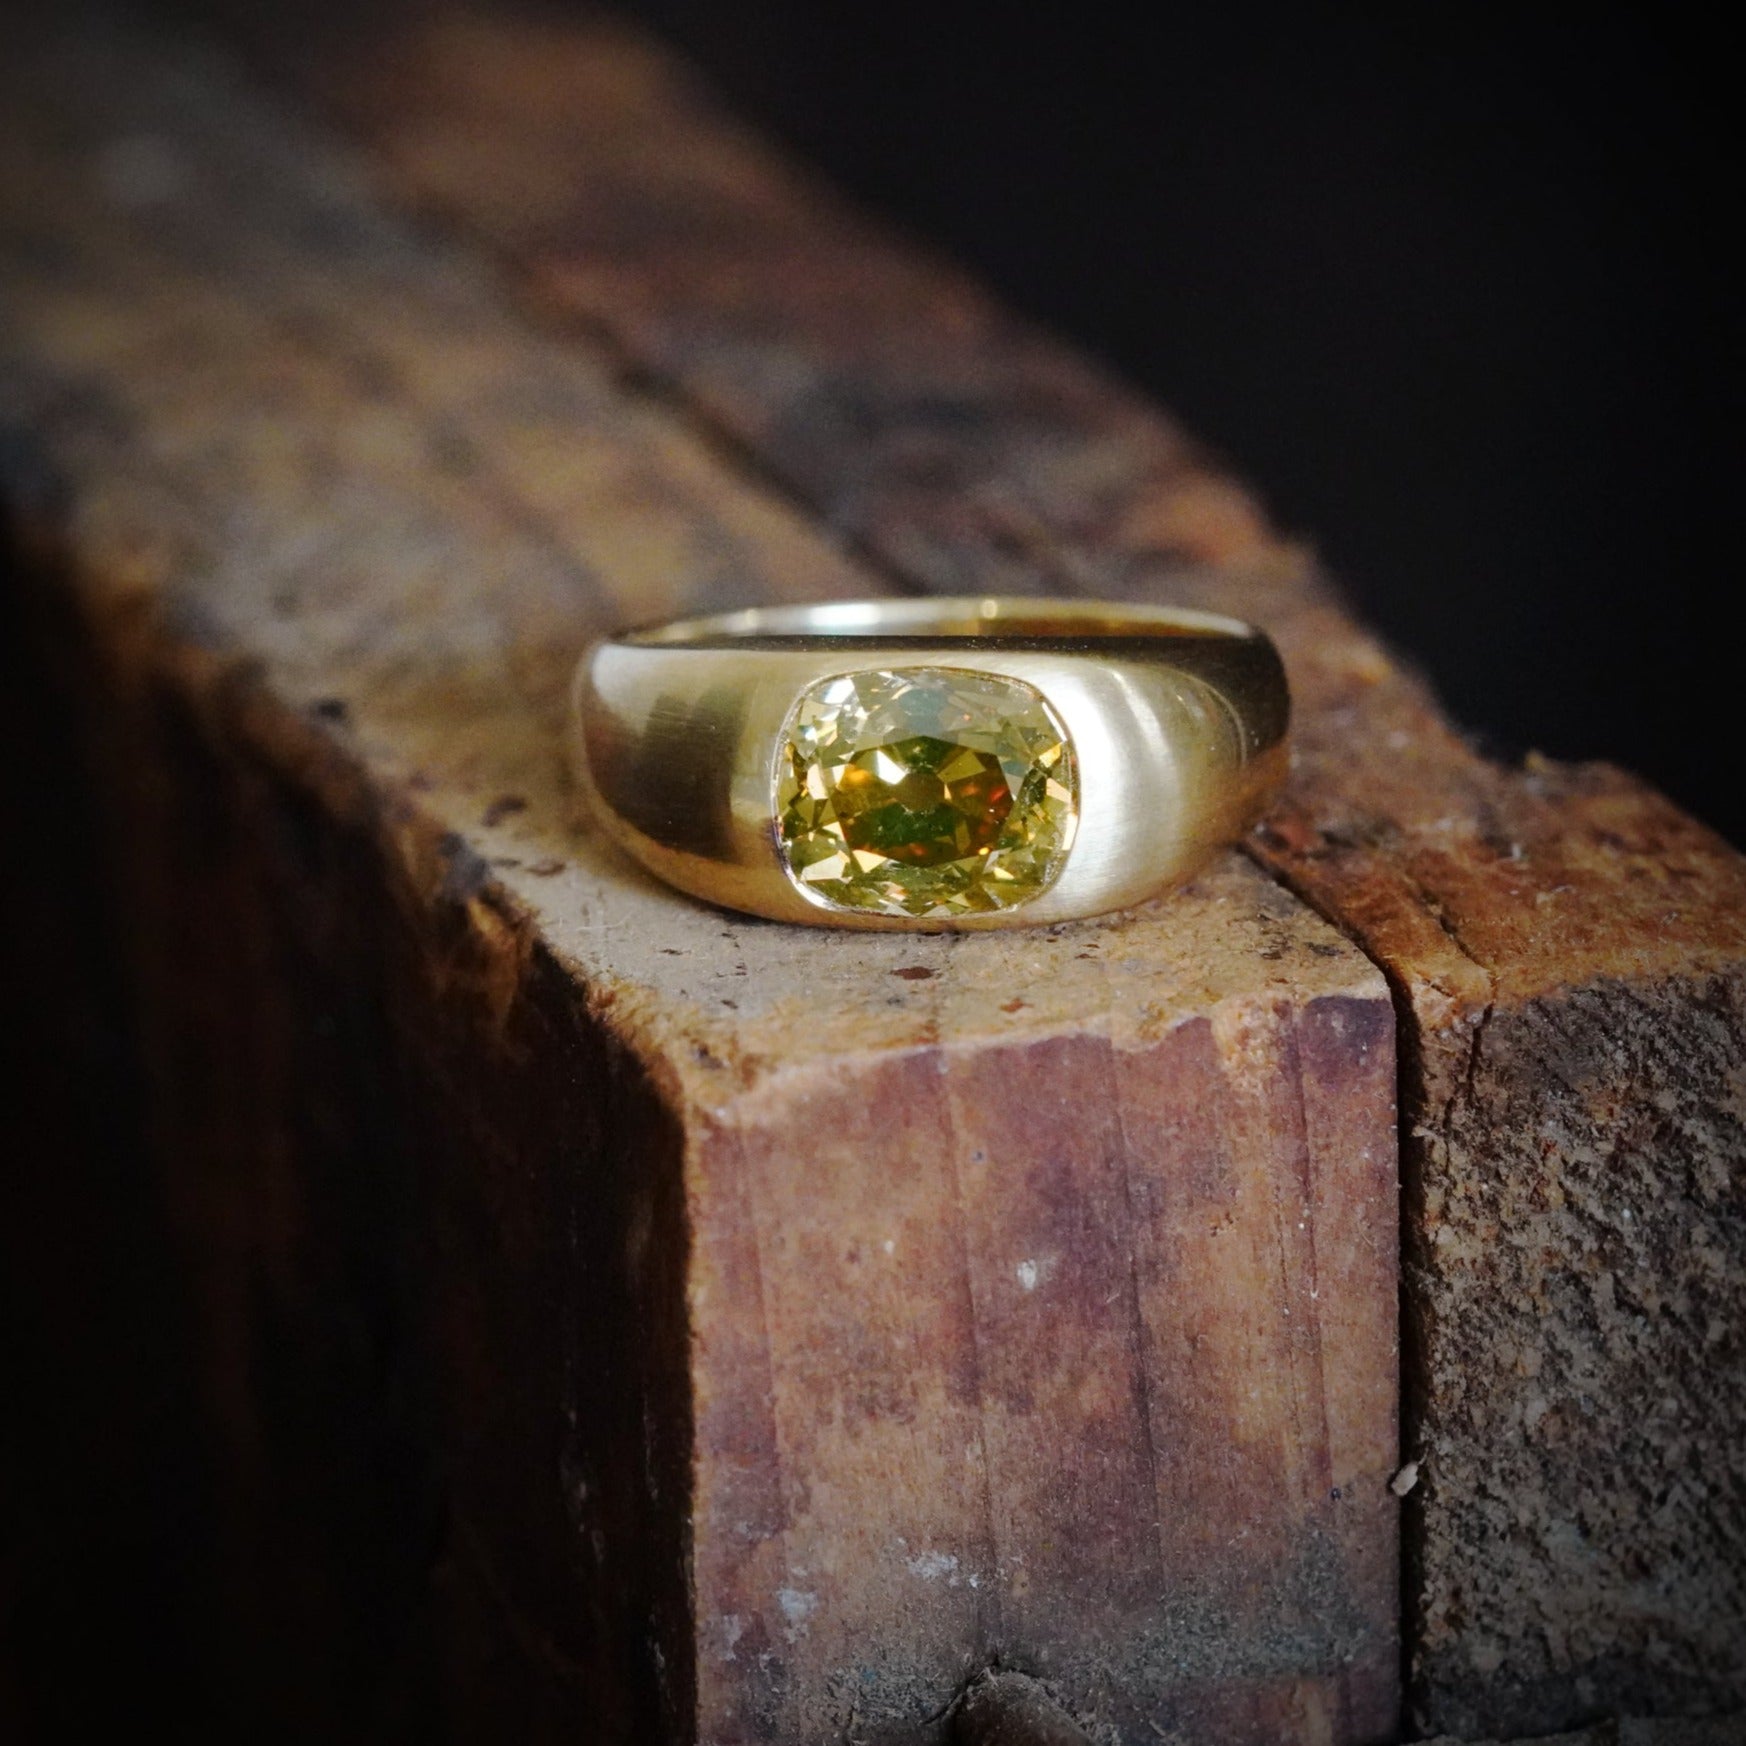 Old Mine Diamond Ring, 2.31 ct